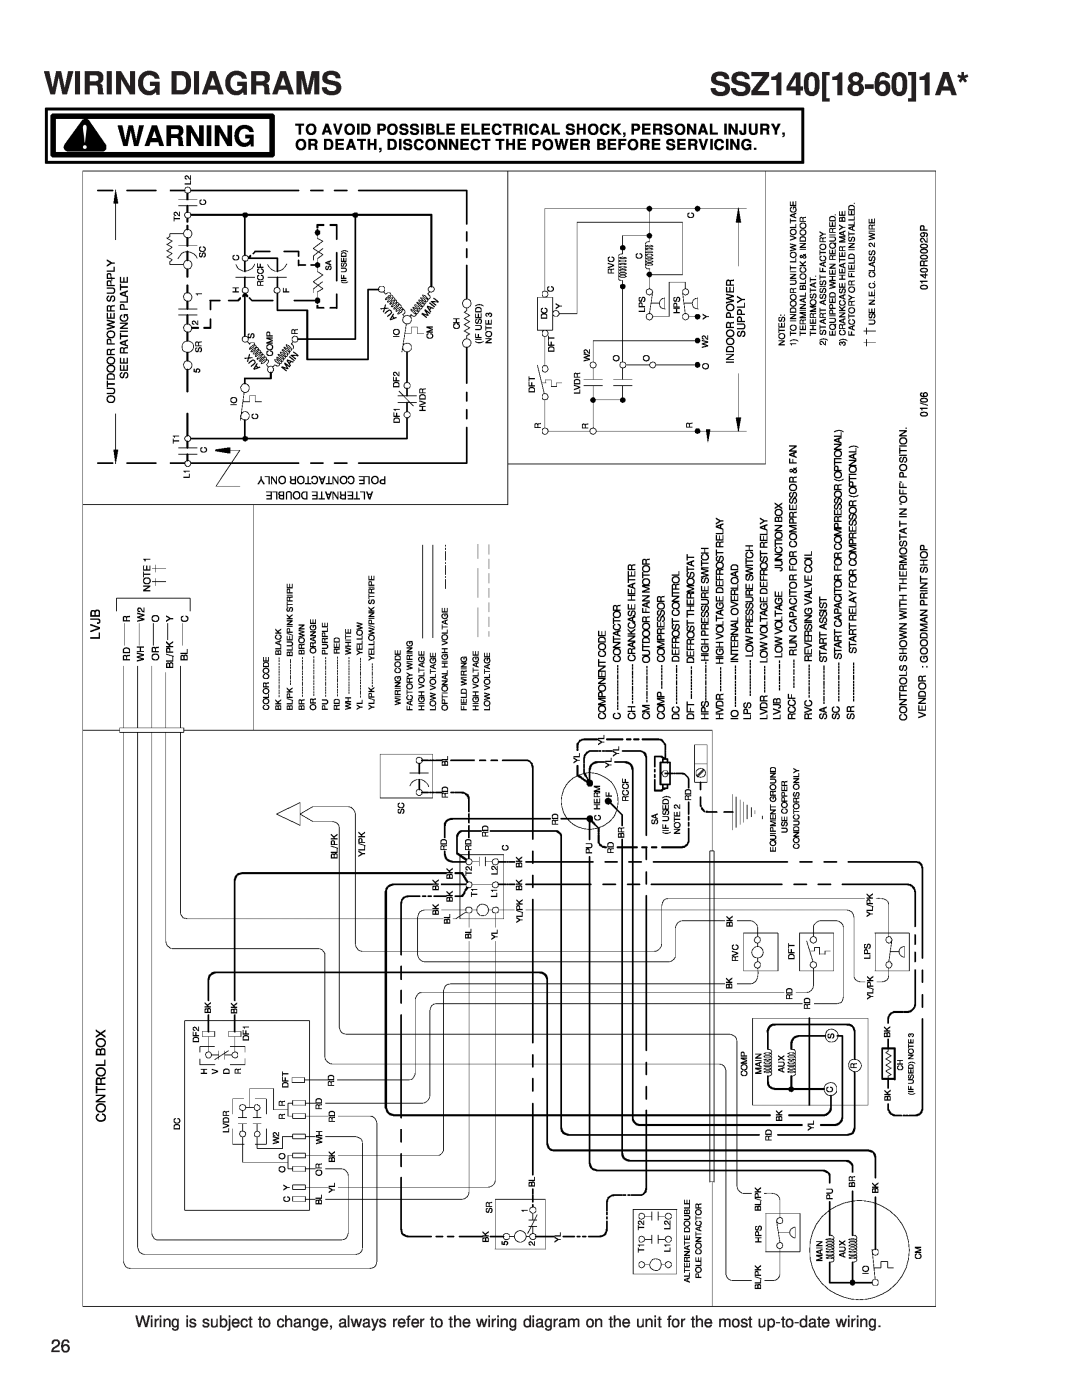 Goodman Mfg SSZ140181A service manual Wiring, Diagrams, To Or 